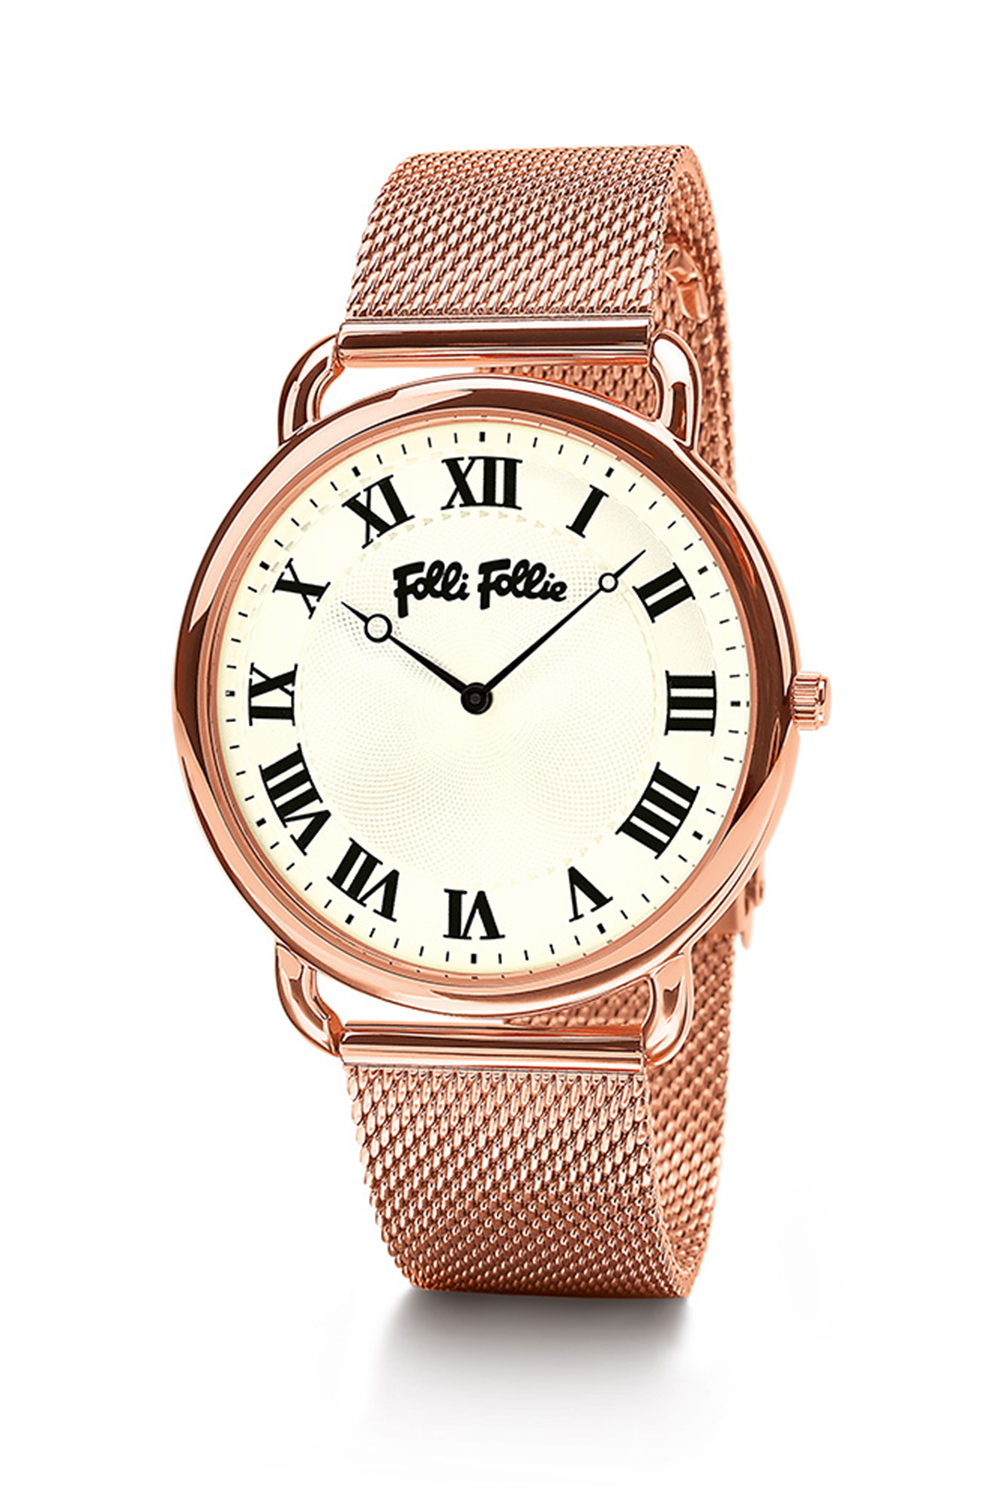 FOLLI FOLLIE – Γυναικείο ρολόι από ατσάλι FOLLI FOLLIE PERFECT MATCH ροζ χρυσό WF16R014BPS-XX